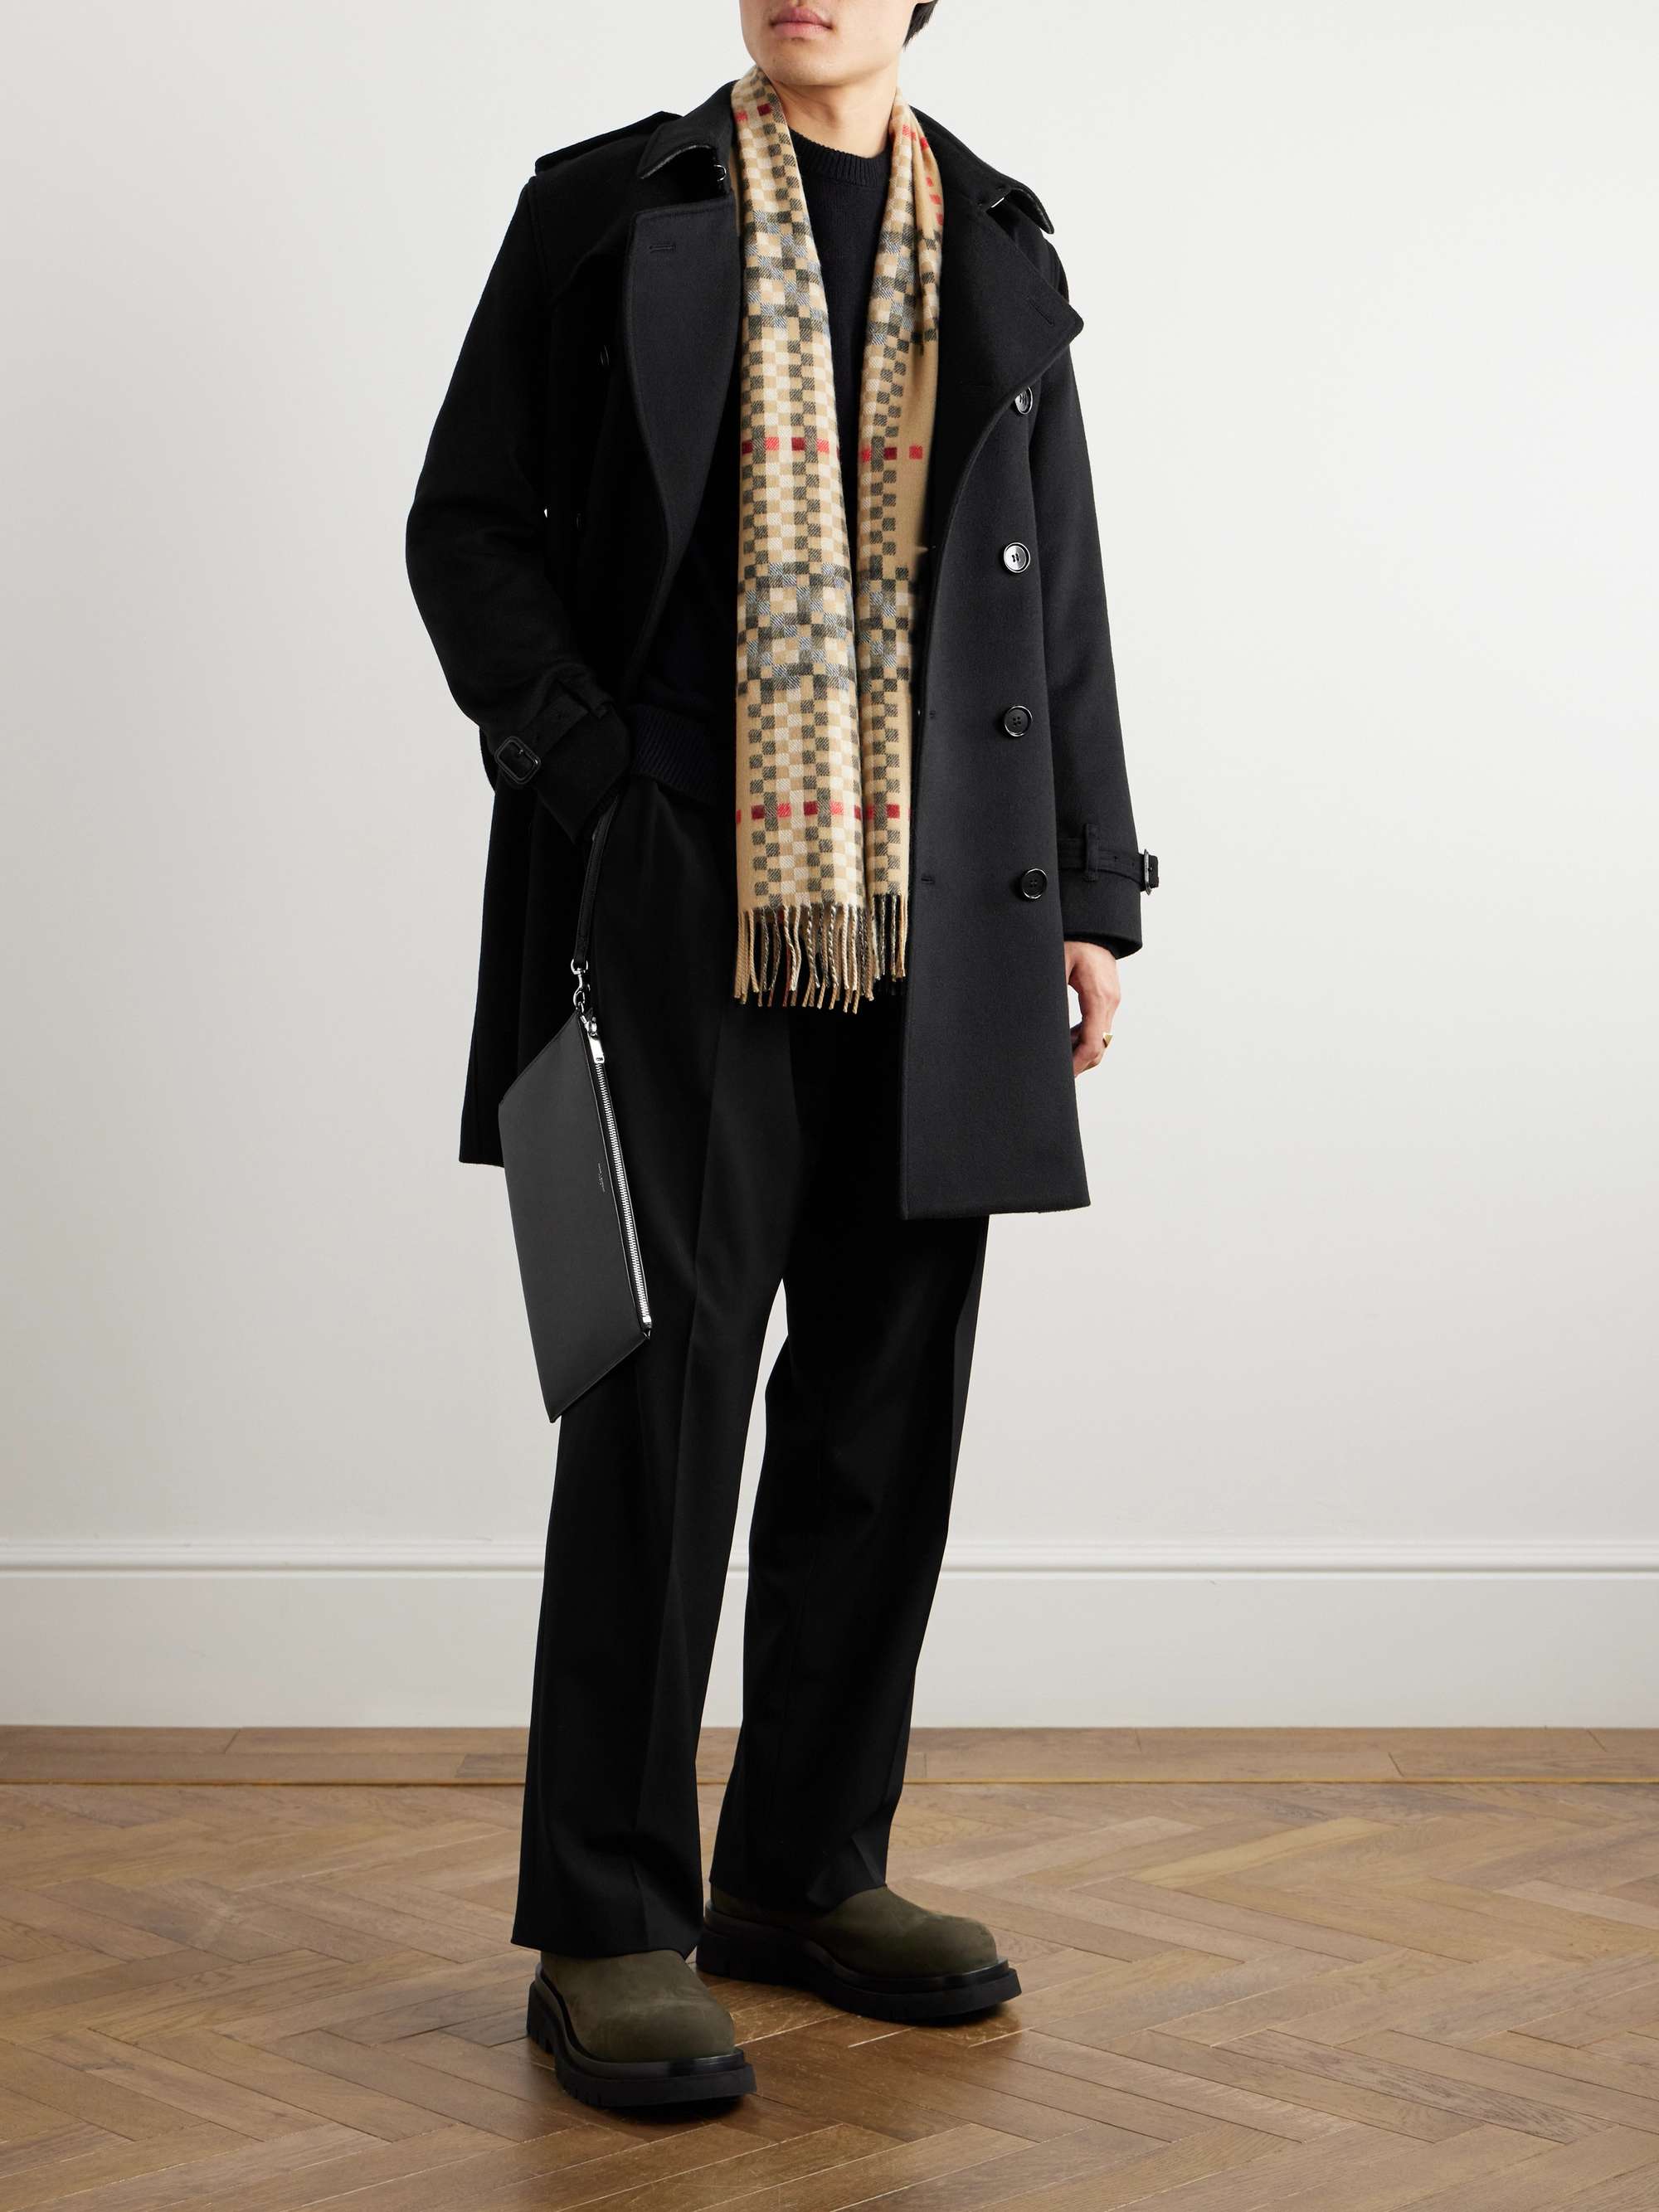 BURBERRY Kensington Double-Breasted Cashmere Coat for Men | MR PORTER